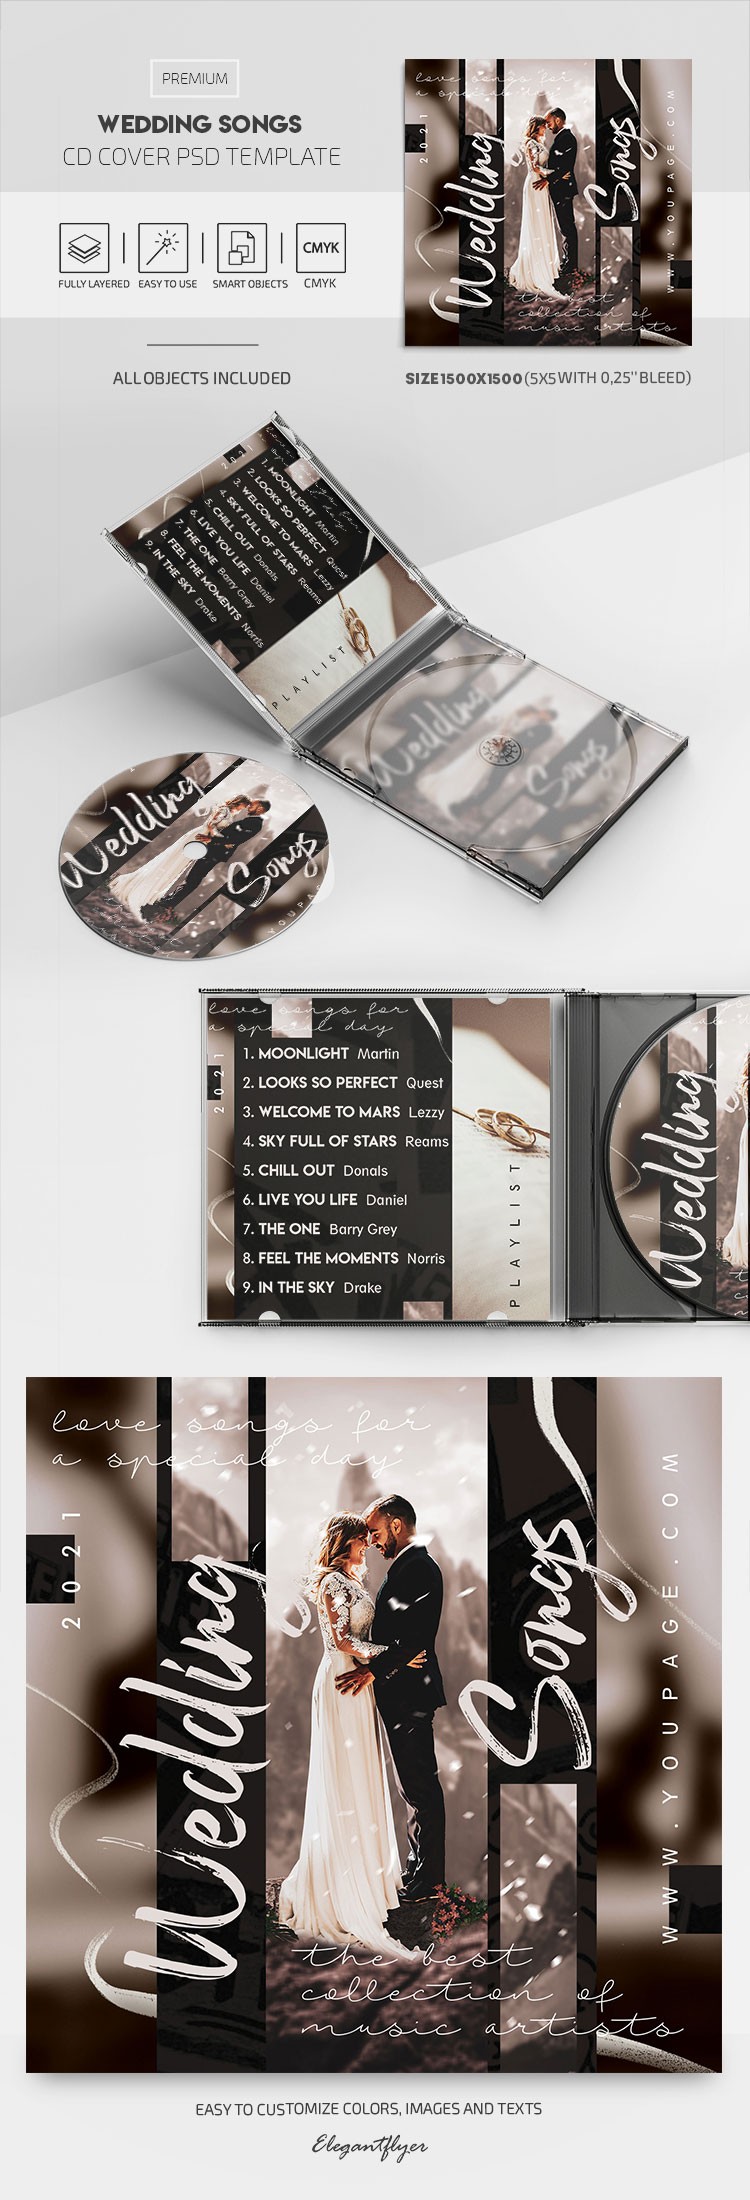 Copertina del CD di canzoni per matrimoni by ElegantFlyer